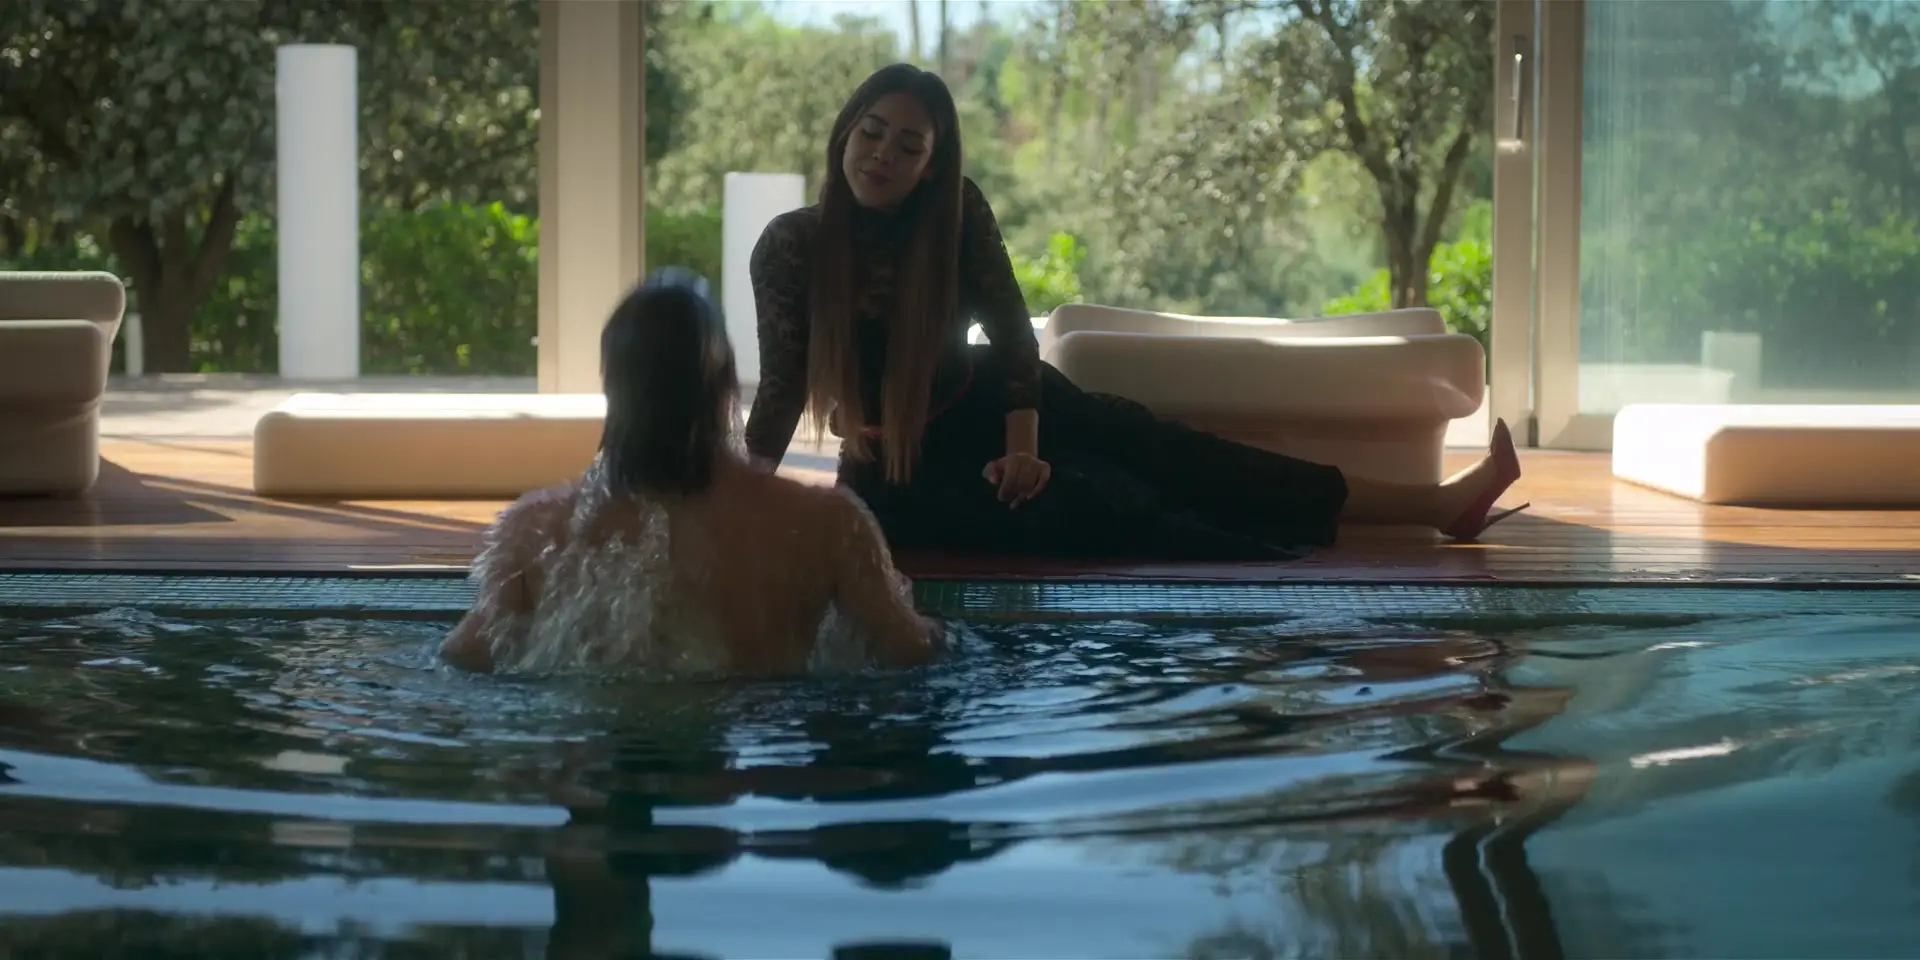 Infinity pool movie sex scenes